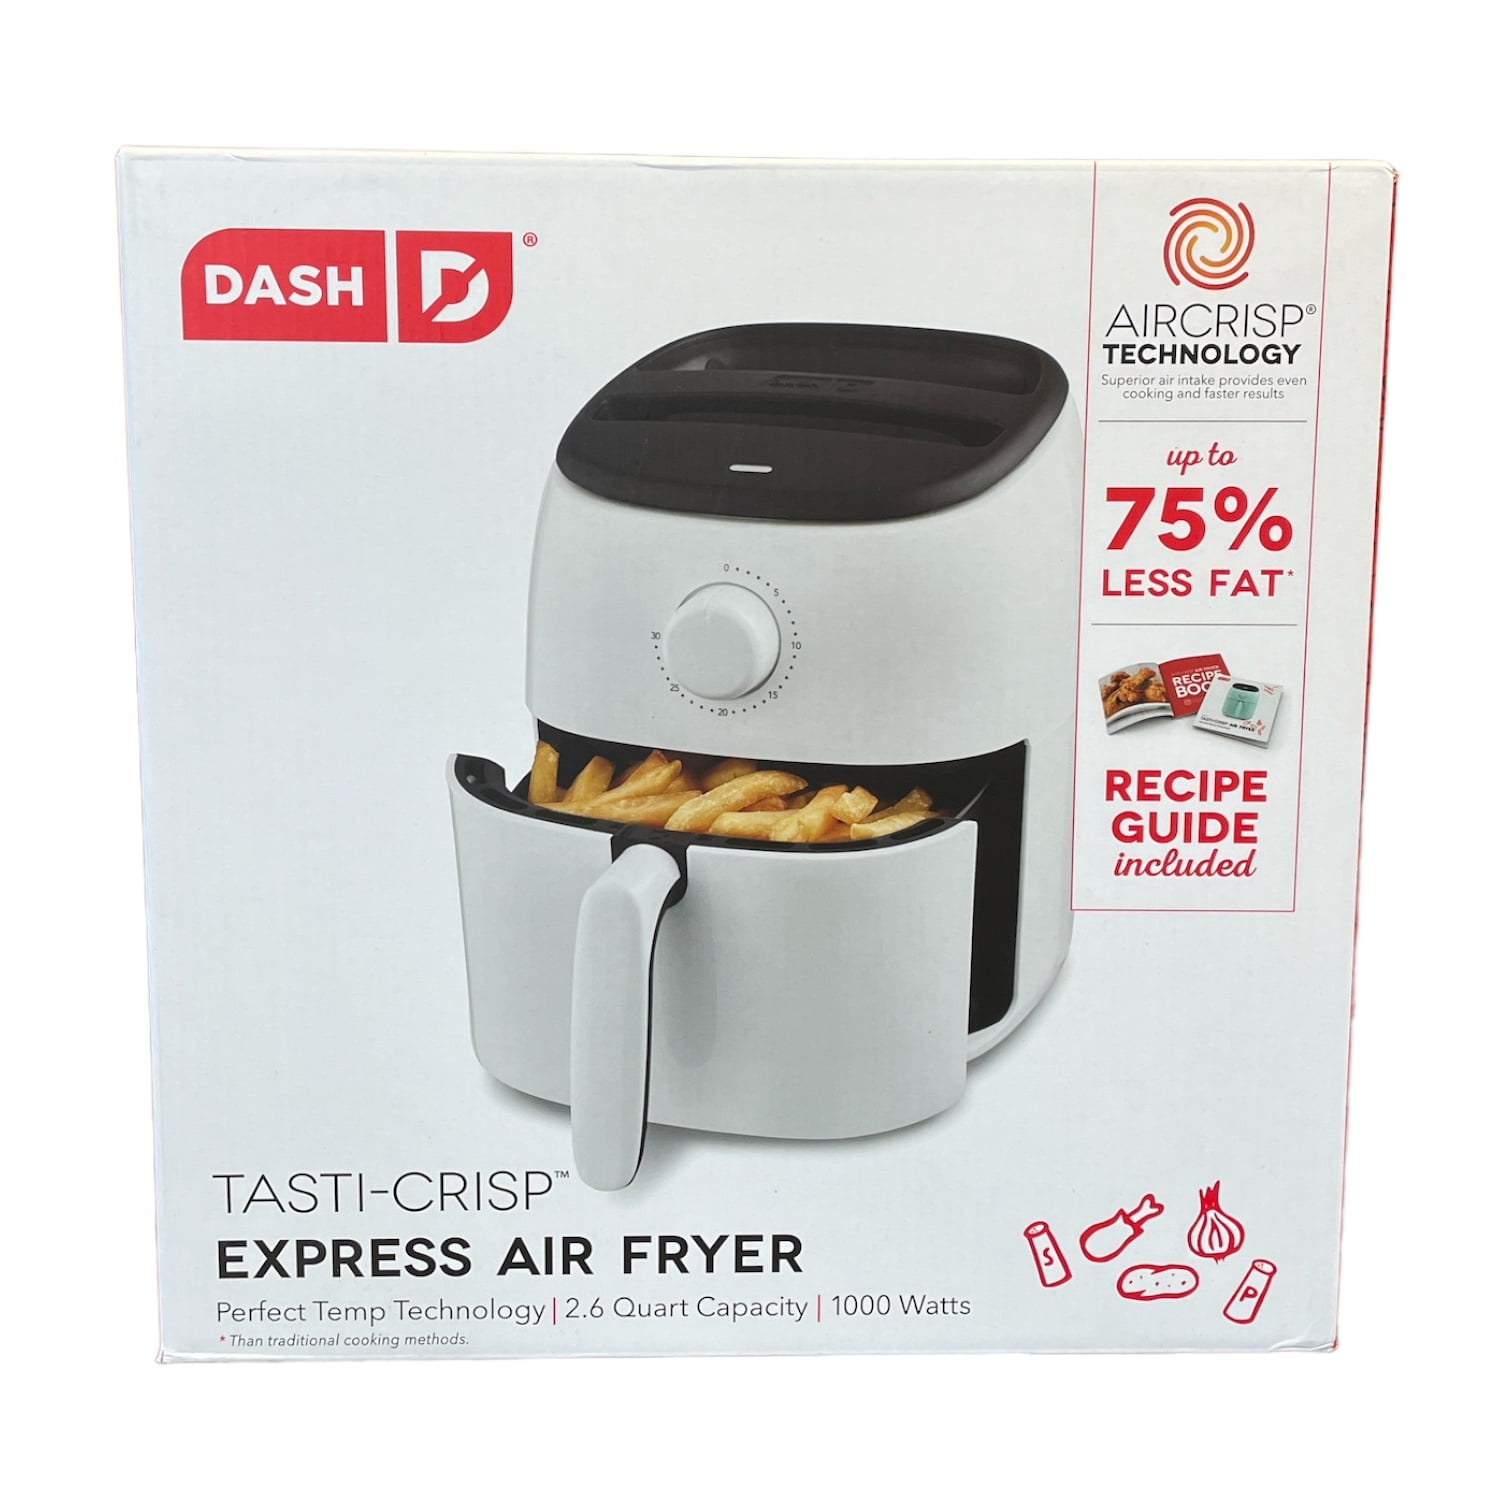 Dash Tasti-Crisp Express Air Fryer, 2.6 Quart with Recipe Guide, White 